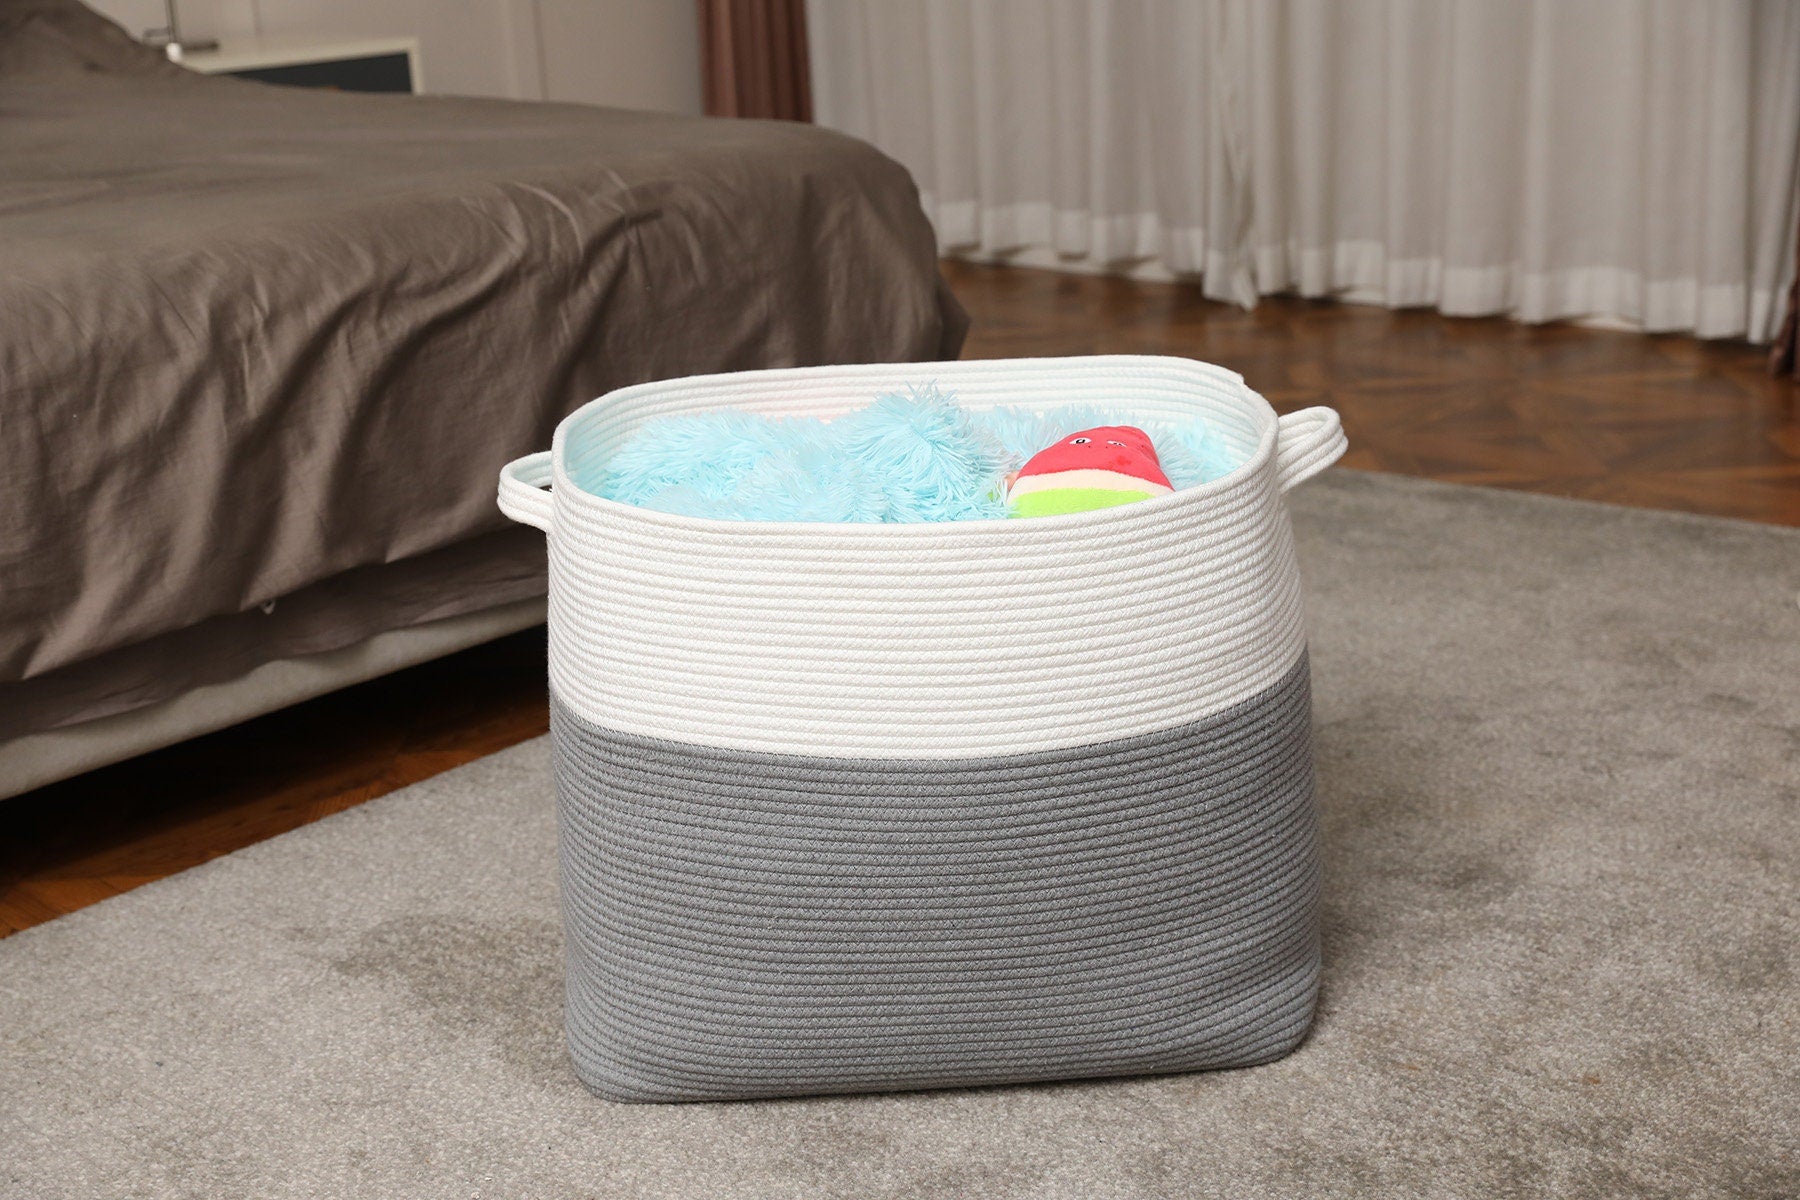 Storage Baskets for Bedroom, Laundry Storage Basket for Clothes